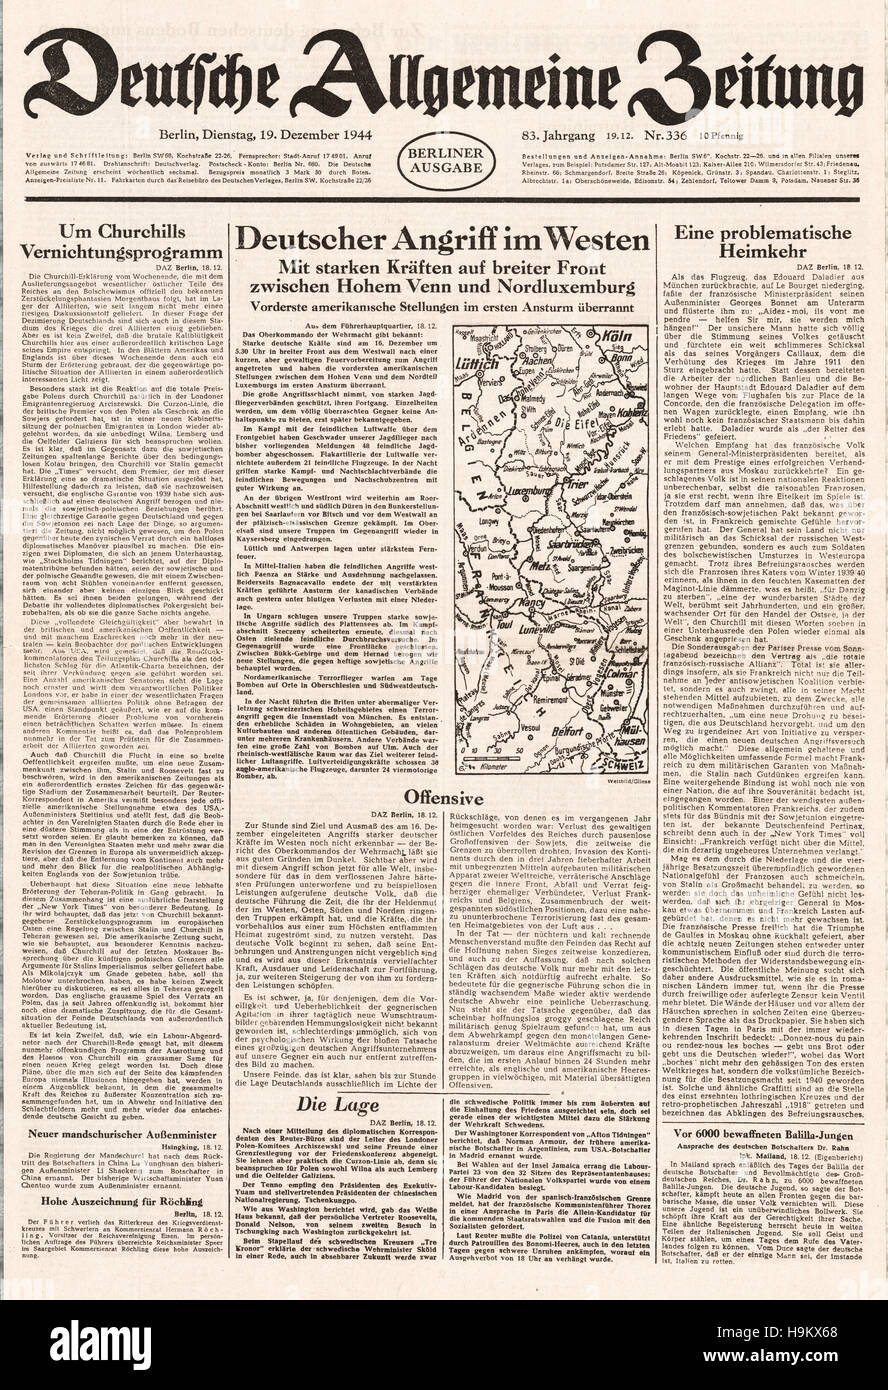 1944 Deutsche Algemeine Zeitung (Germany) front page Battle of the Bulge Stock Photo